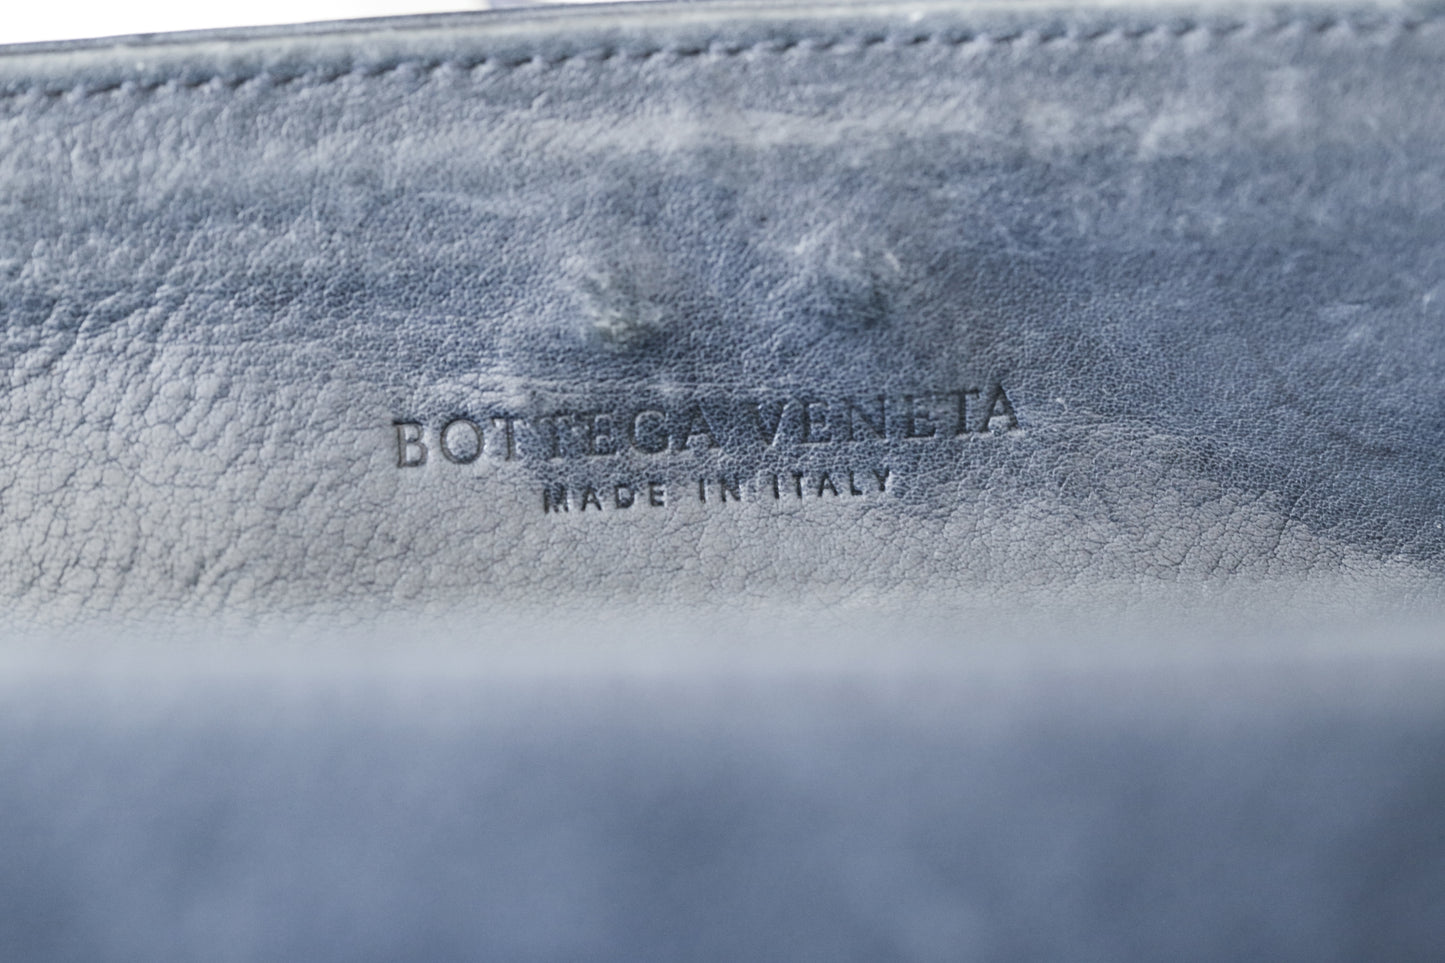 Bottega Veneta sac à main en cuir bleu marine